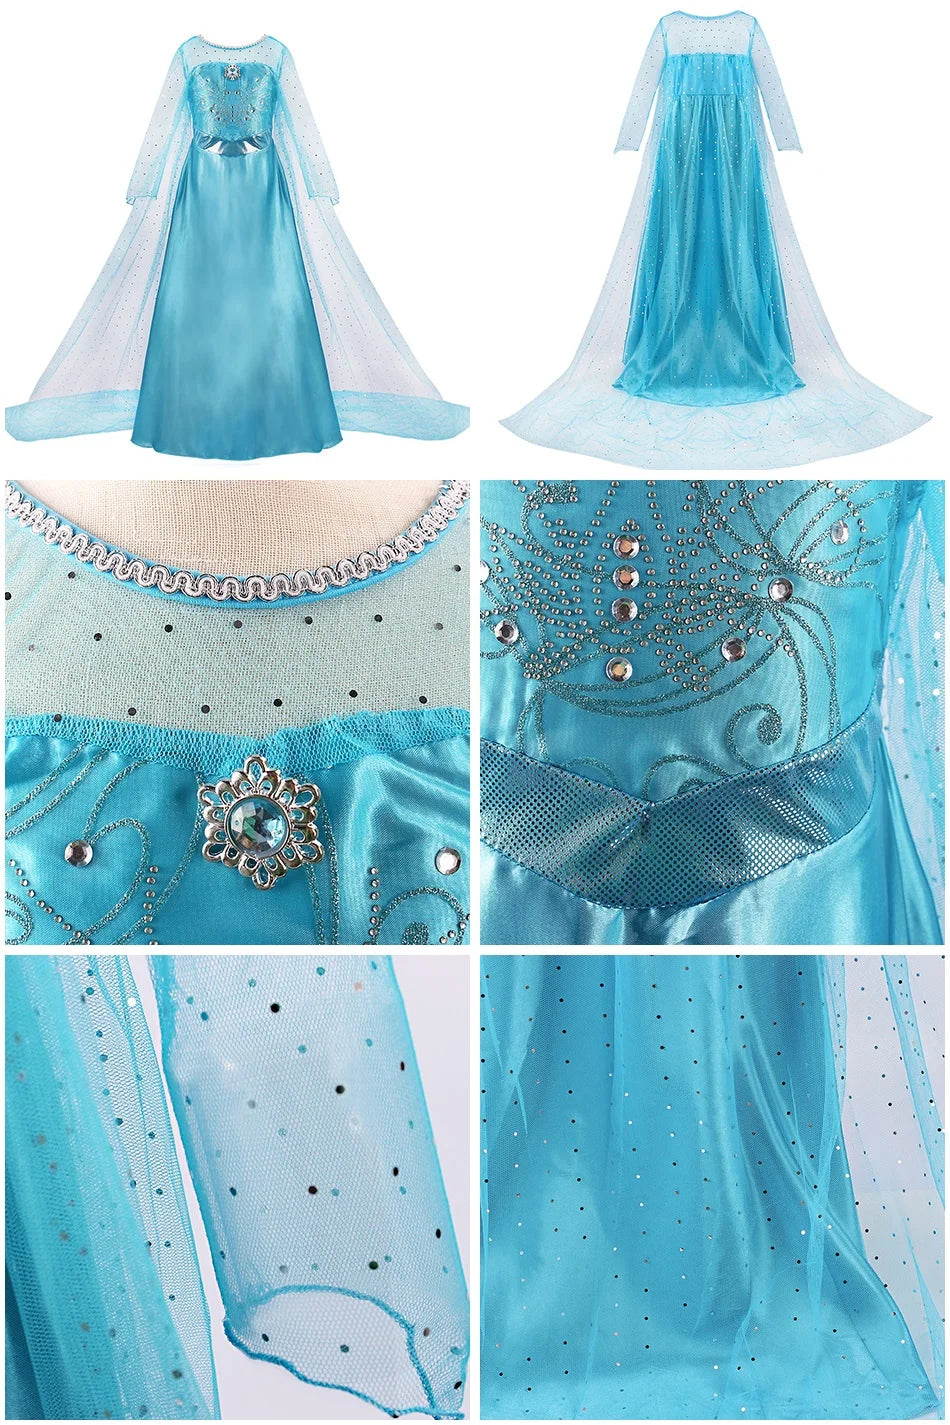 Belle Costume Girl Anna Elsa Encanto Princess Dress